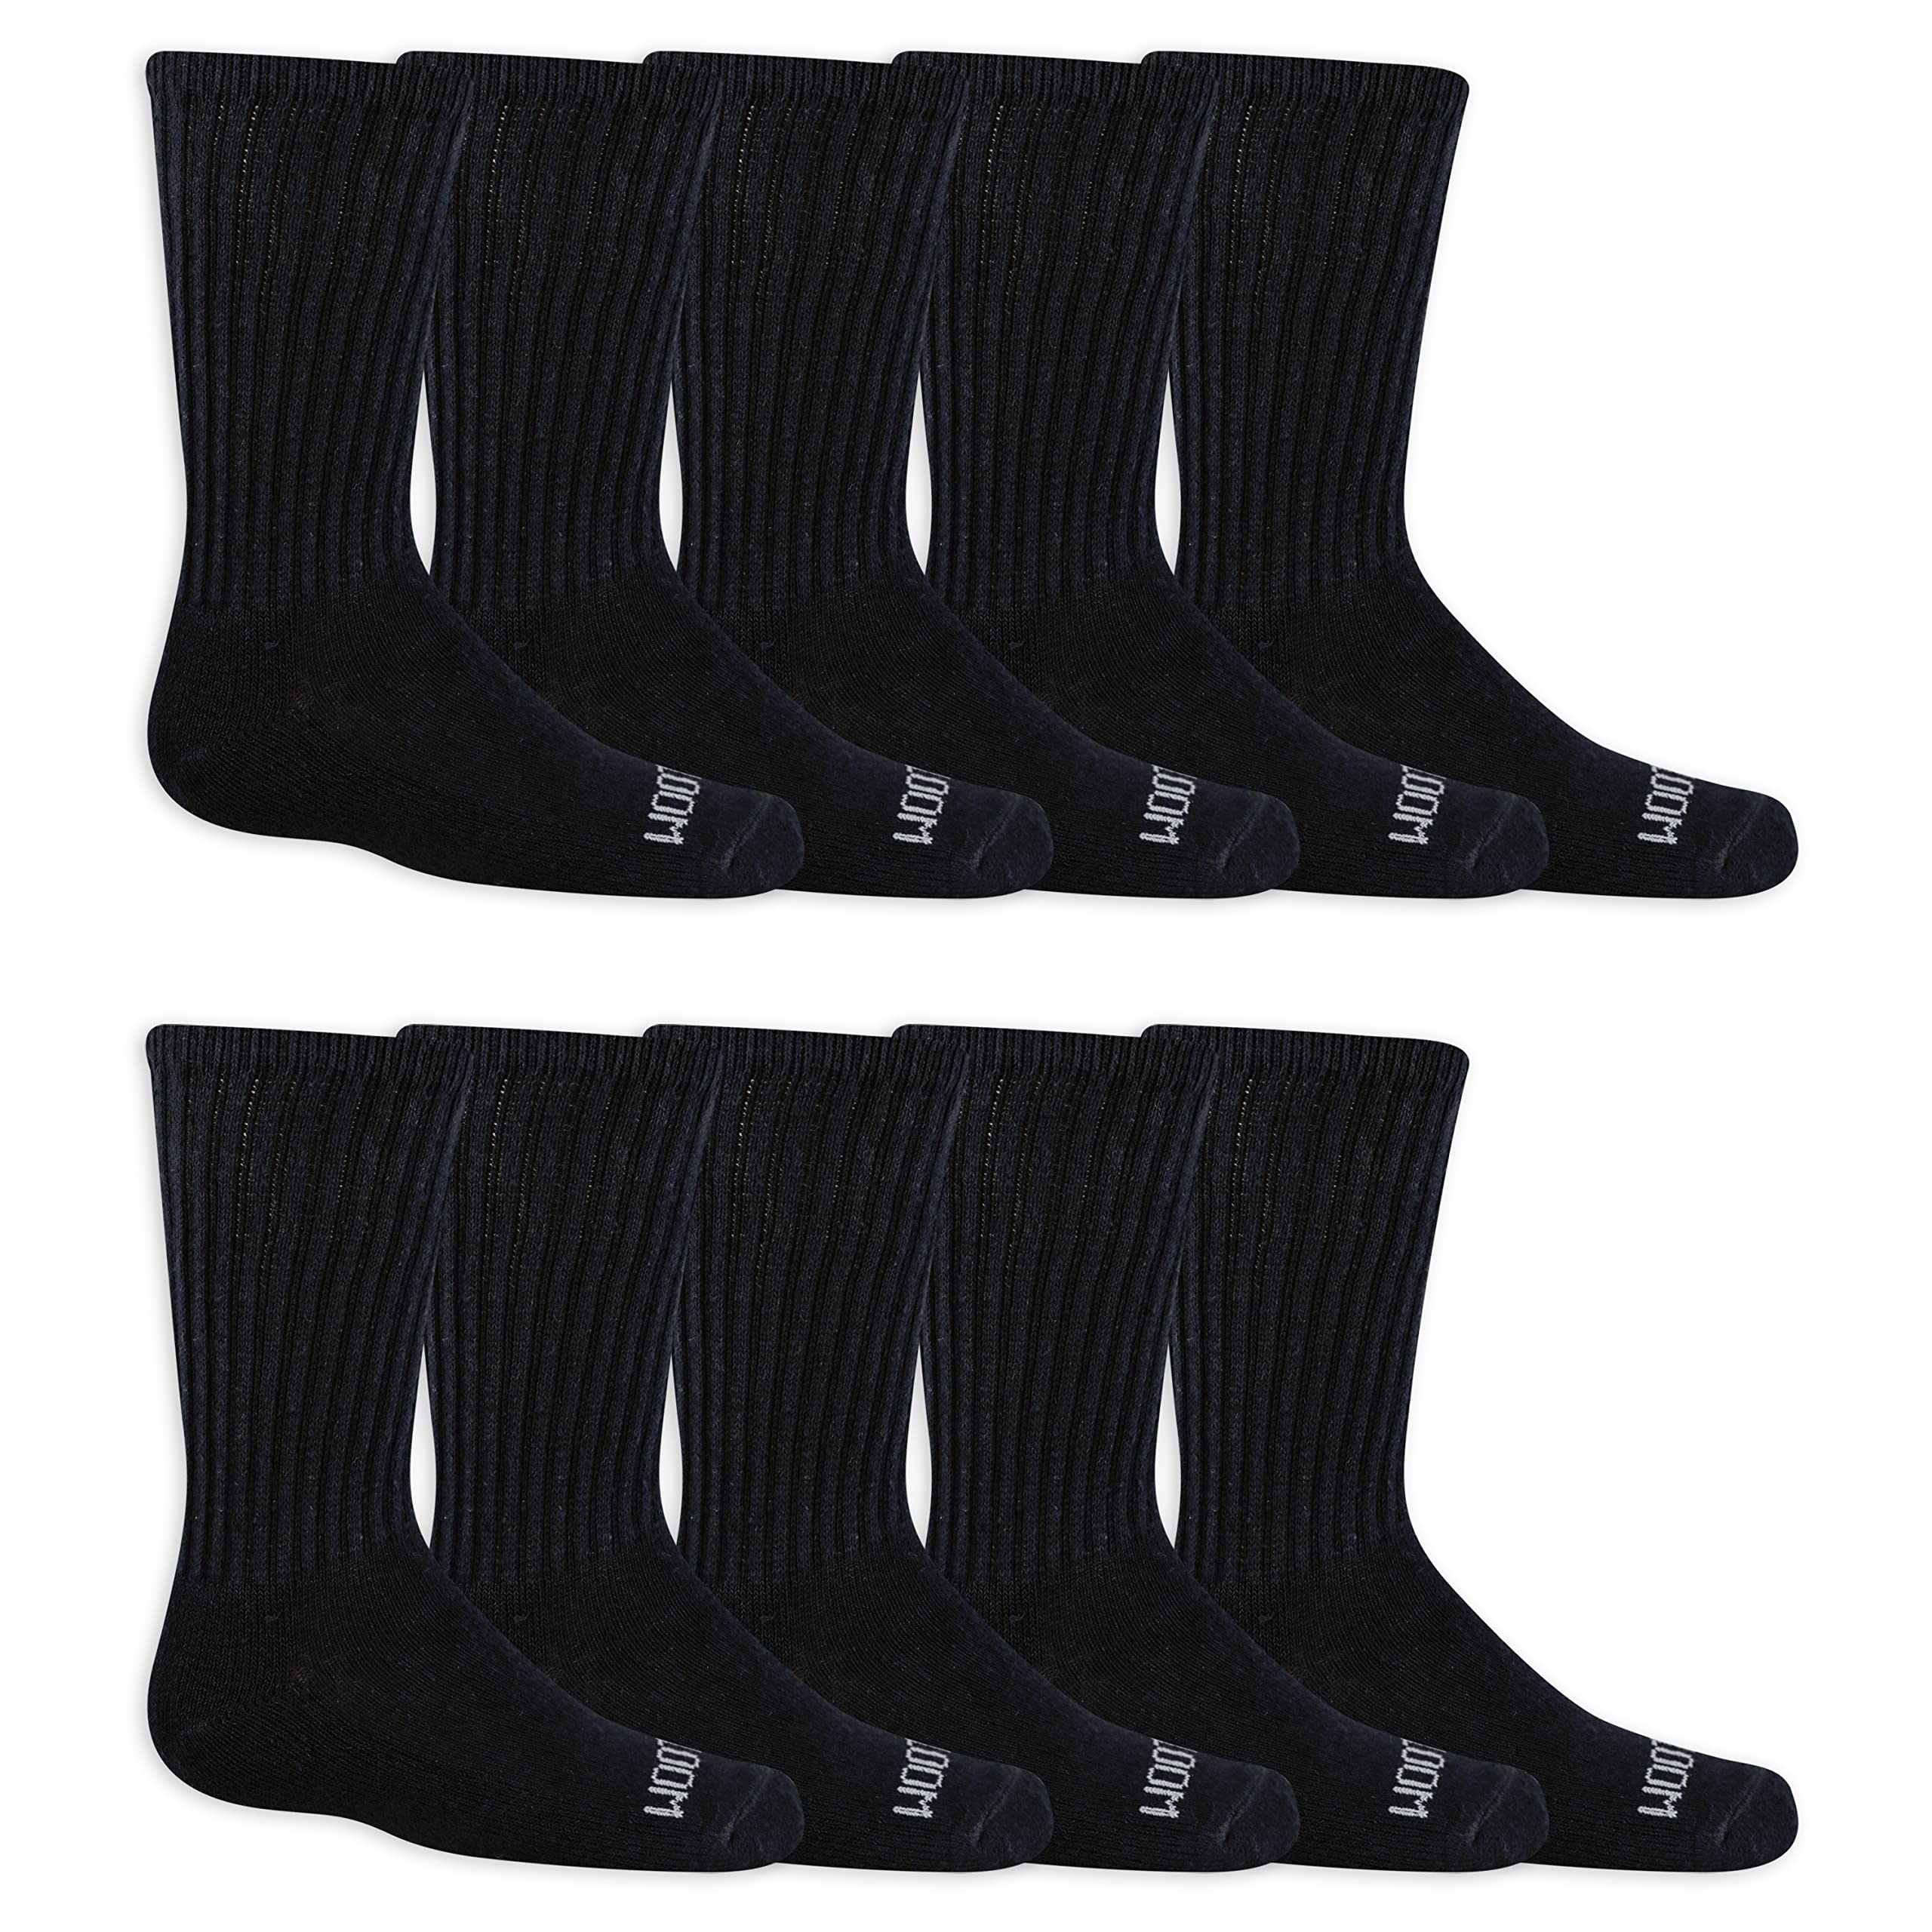 Fruit of the Loom Boys' 10 Pair Pack Dual Defense Cushioned Comfort Socks, Black, Large